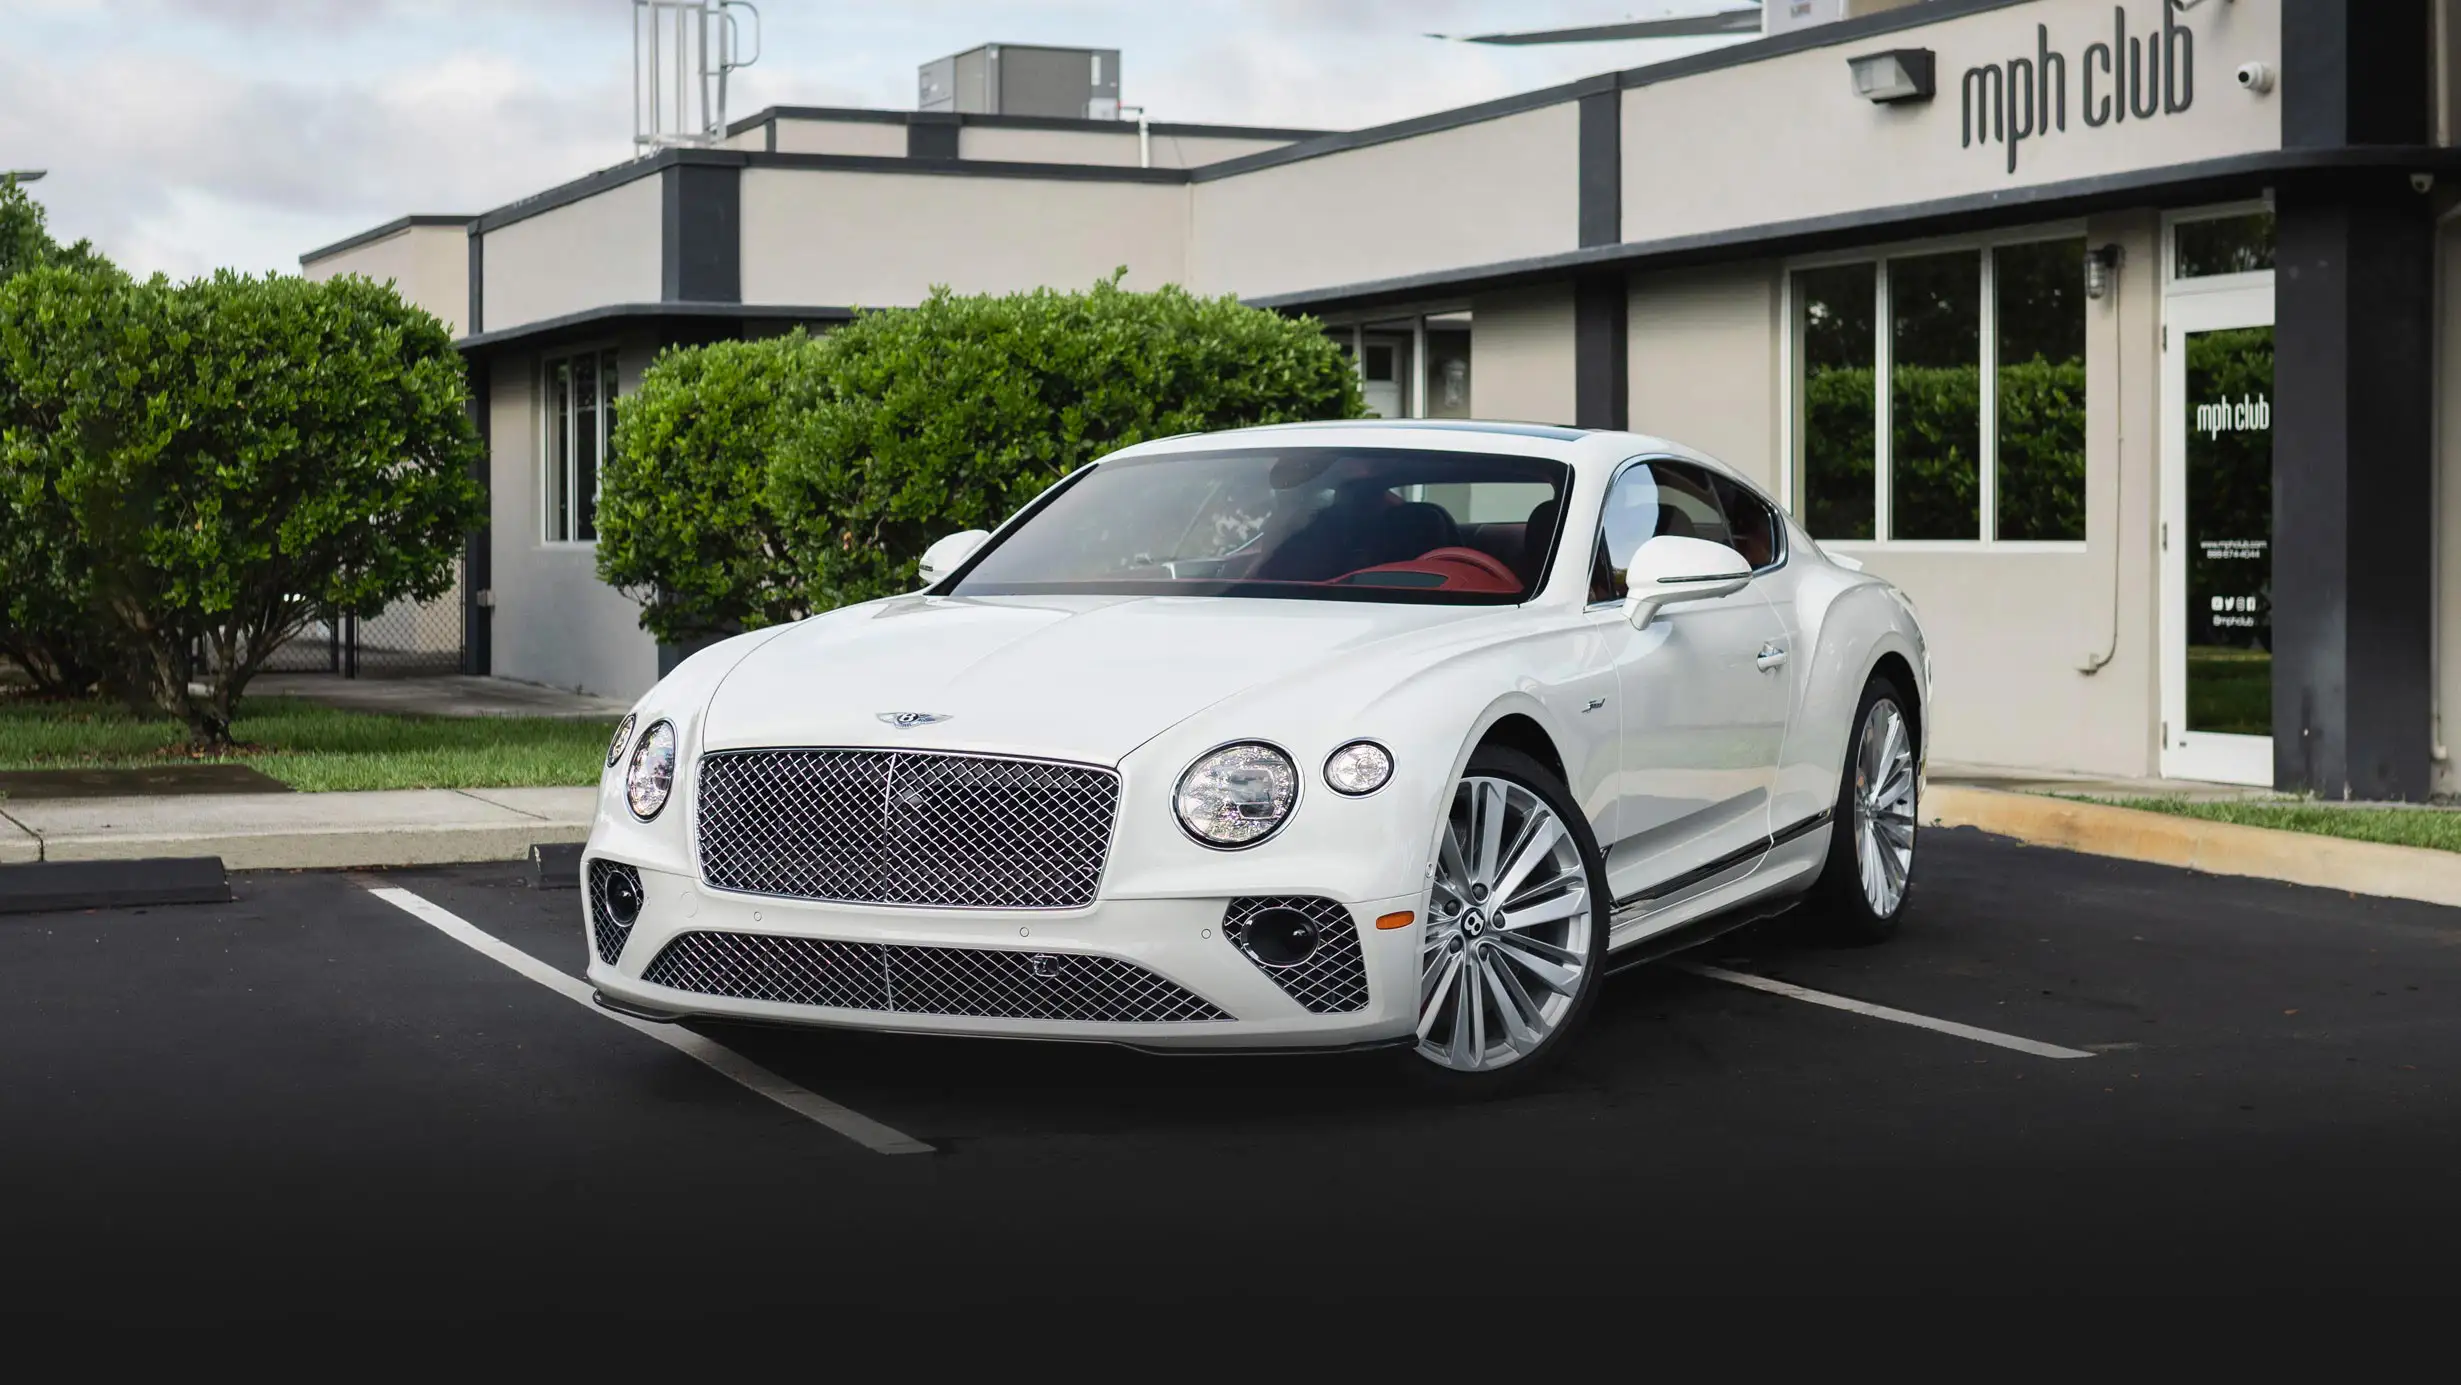 White on red Bentley GT rental Miami profile view - mph club